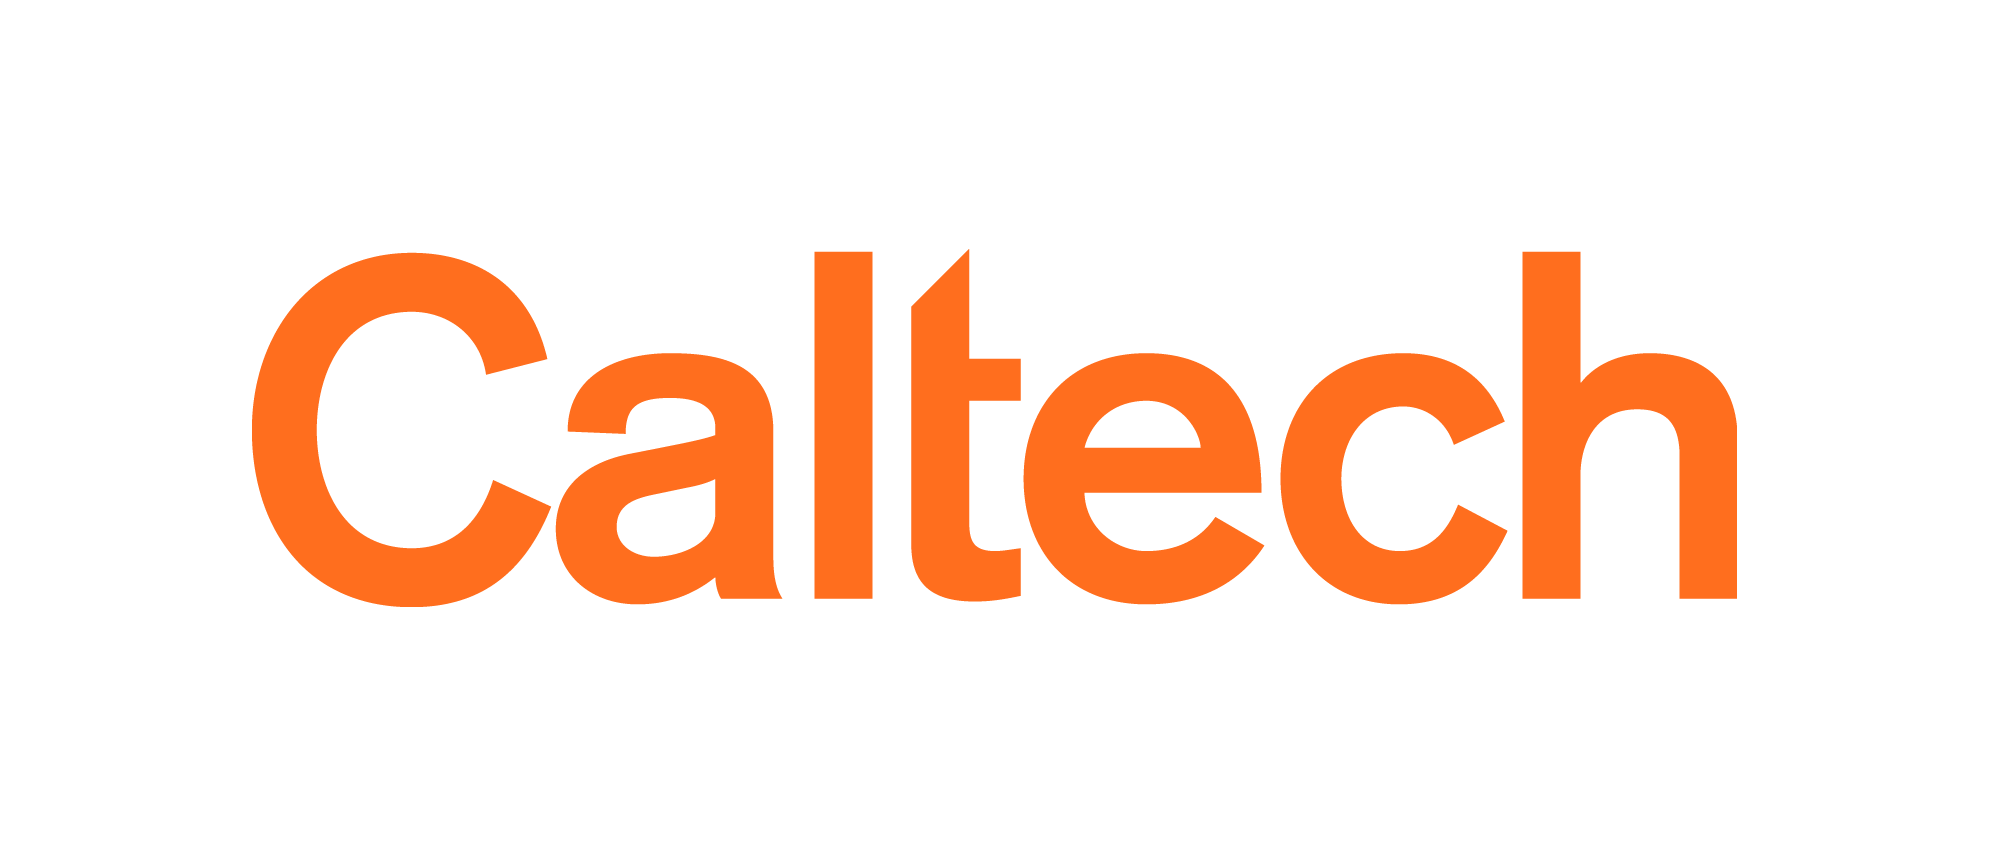 https://alainalevine.com/wp-content/uploads/2022/04/Caltech_logo_2014.png